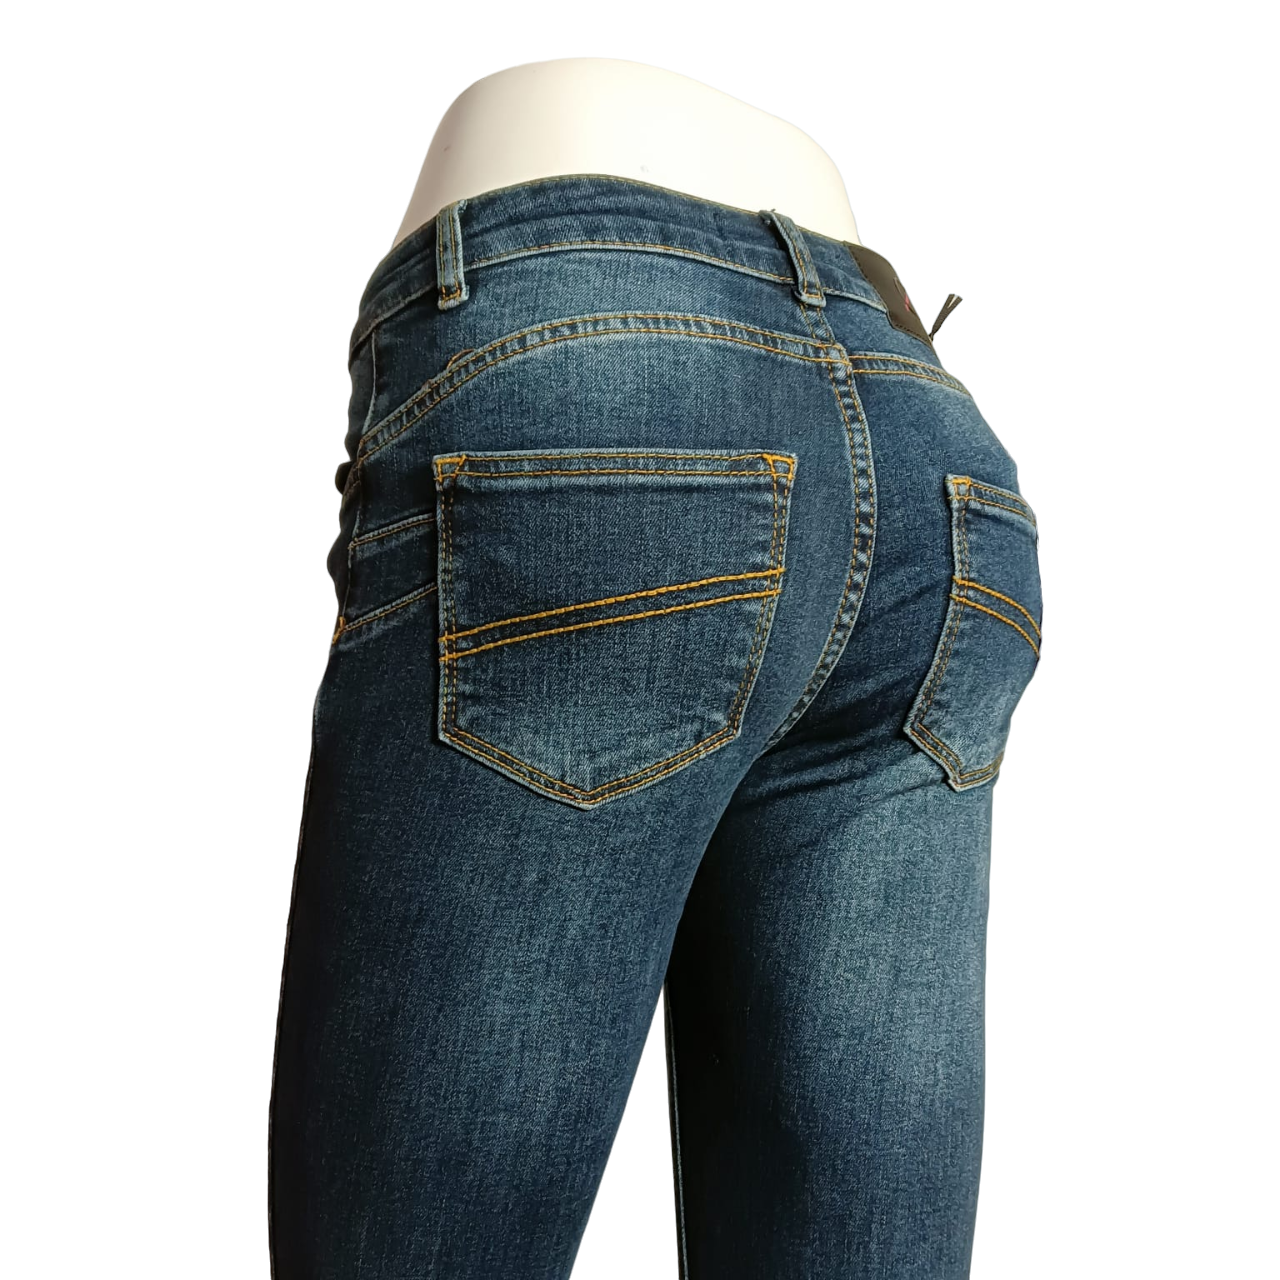 CafèNoir women&#39;s jeans trousers Denim Skinny c7 JJ1017 B008 medium dark blue 